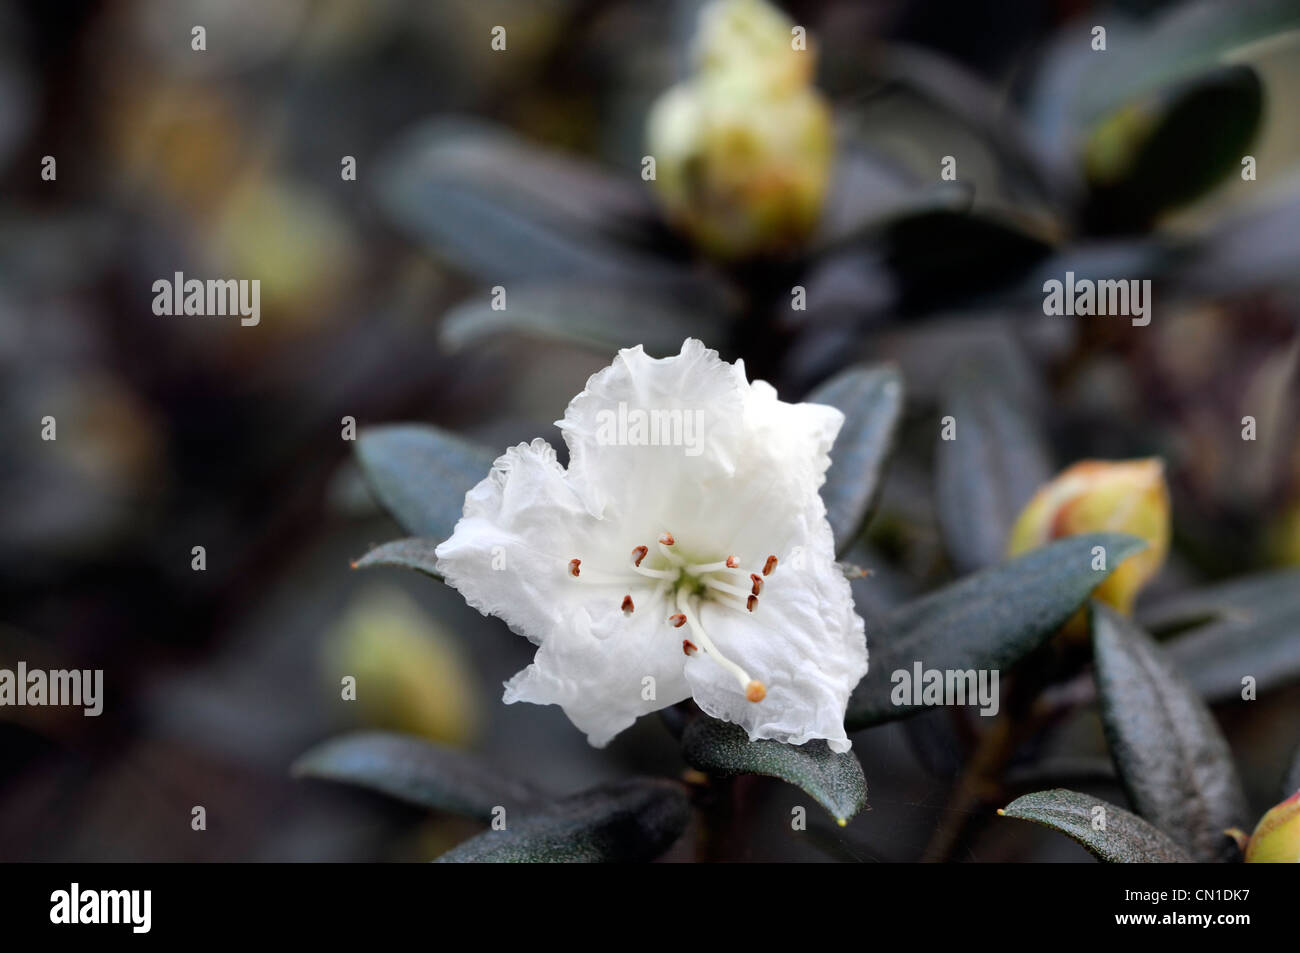 Rhododendron Kamm Agm Closeup selektiven Fokus weiße Creme Sträucher Blumen Blüten Pflanzen Porträts Stockfoto